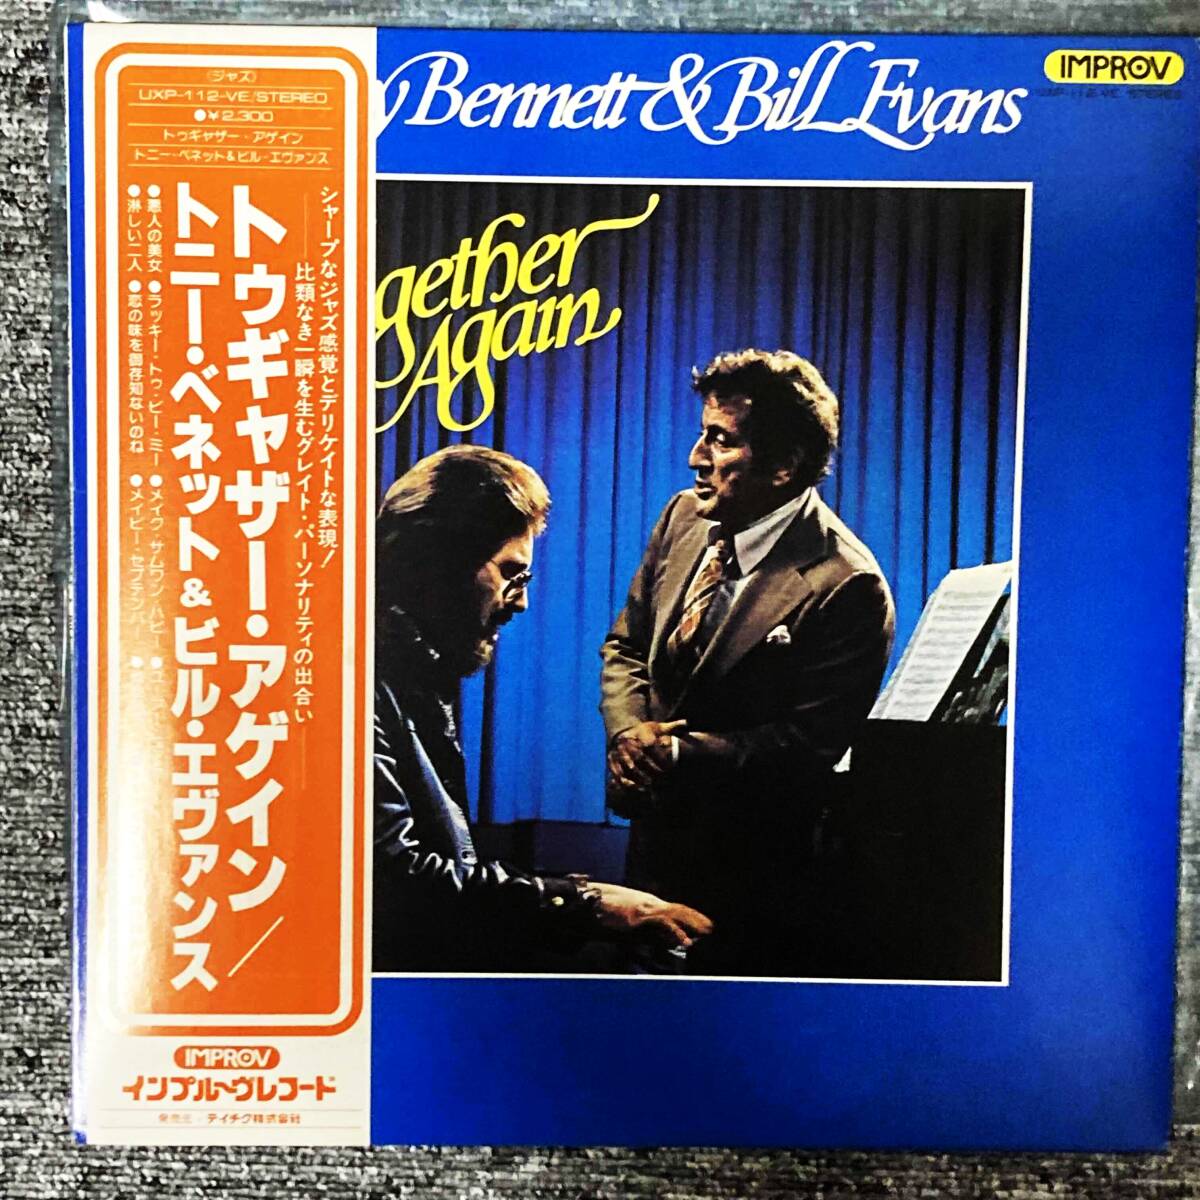 LPレコード Tony Bennett 「 Together Again 」/ Improv ( ULS-112-VE )/ Jazz